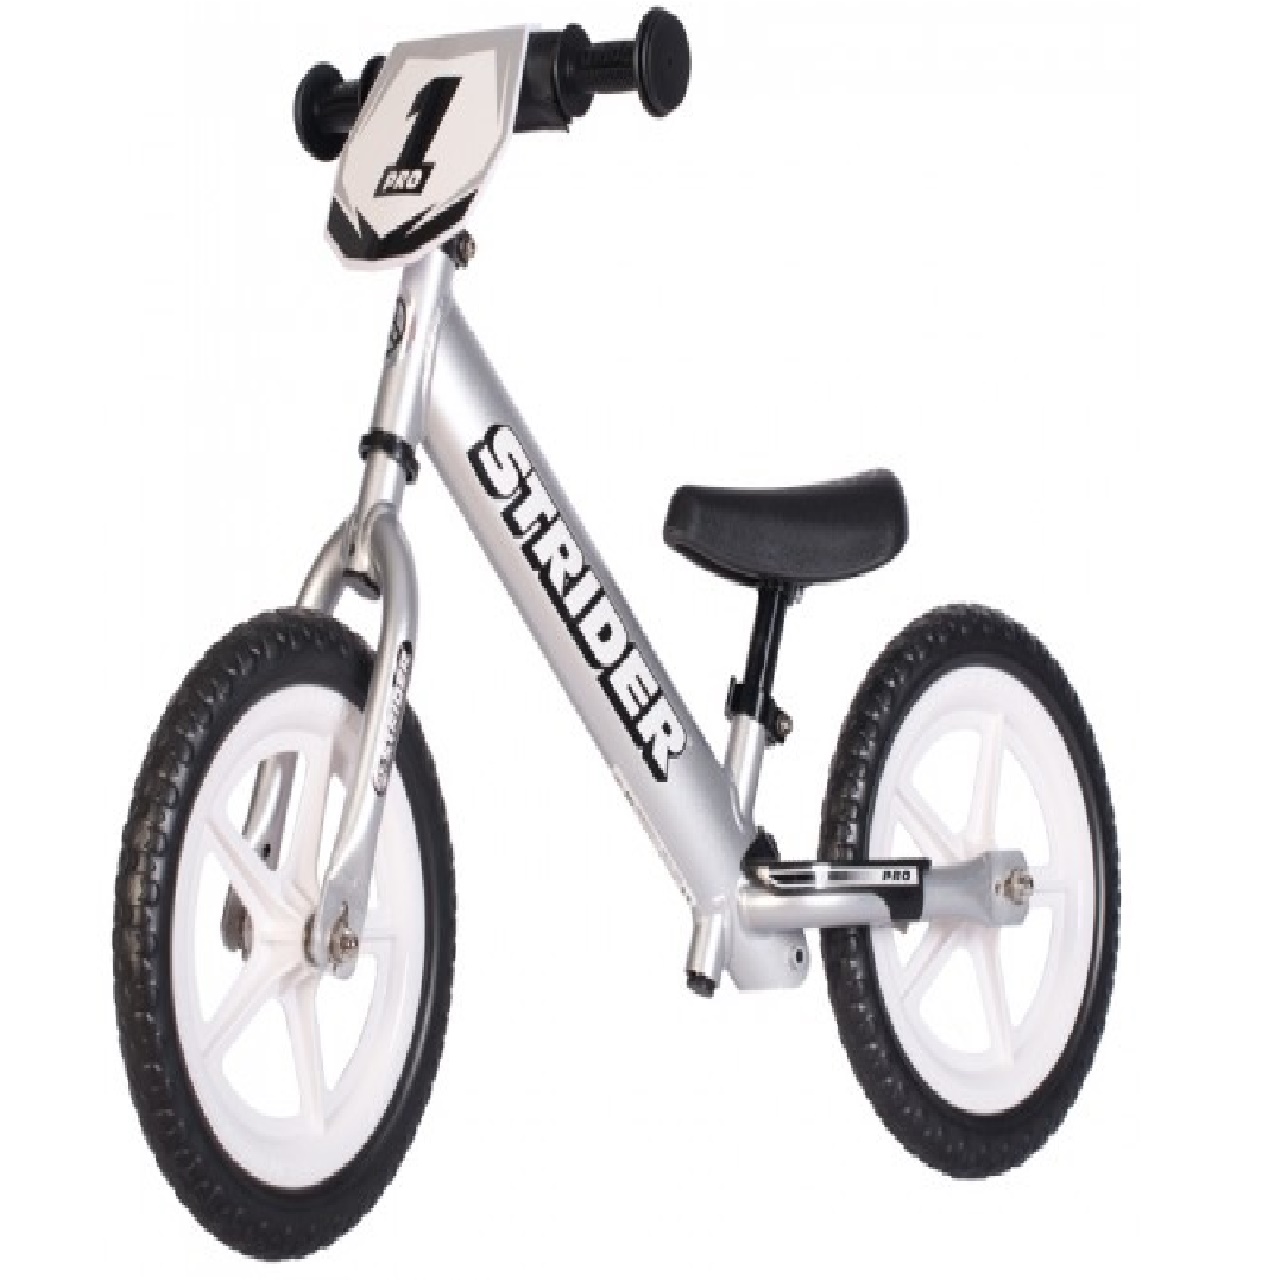 Strider 12 Pro Balance Bike No Pedal All Aluminum Kids Learn to ride bike